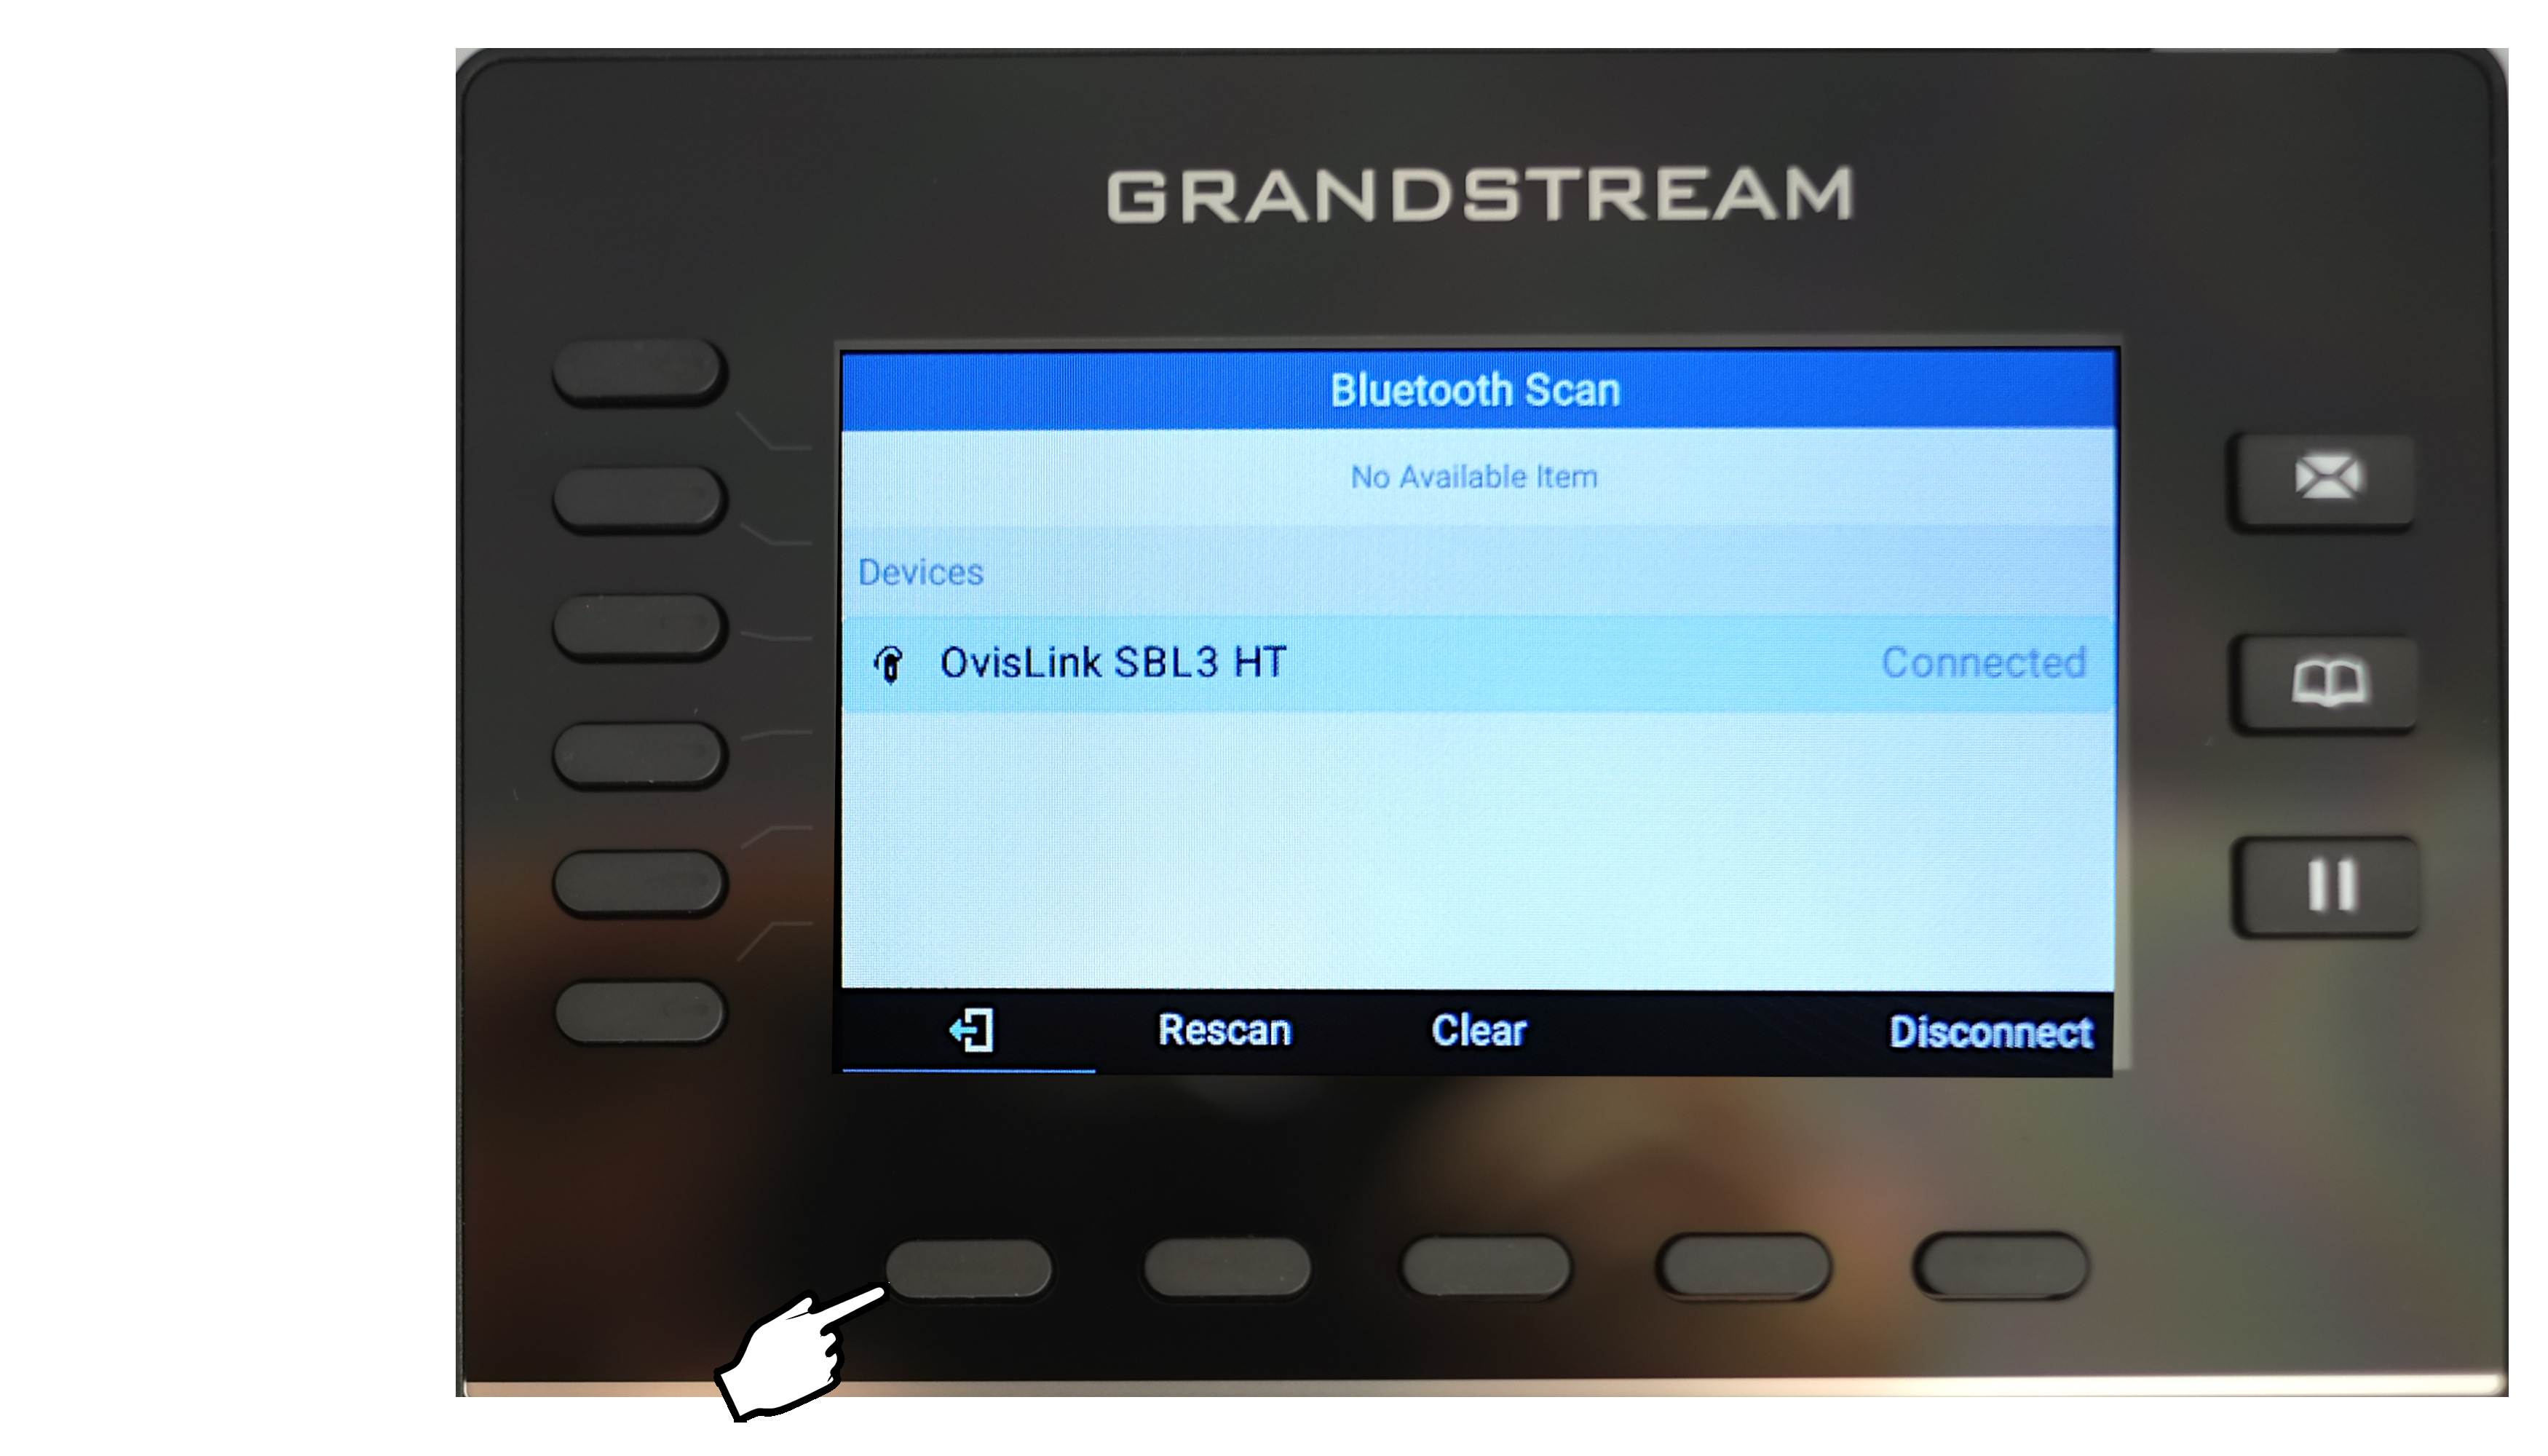 Grandstream phone setup menu exit